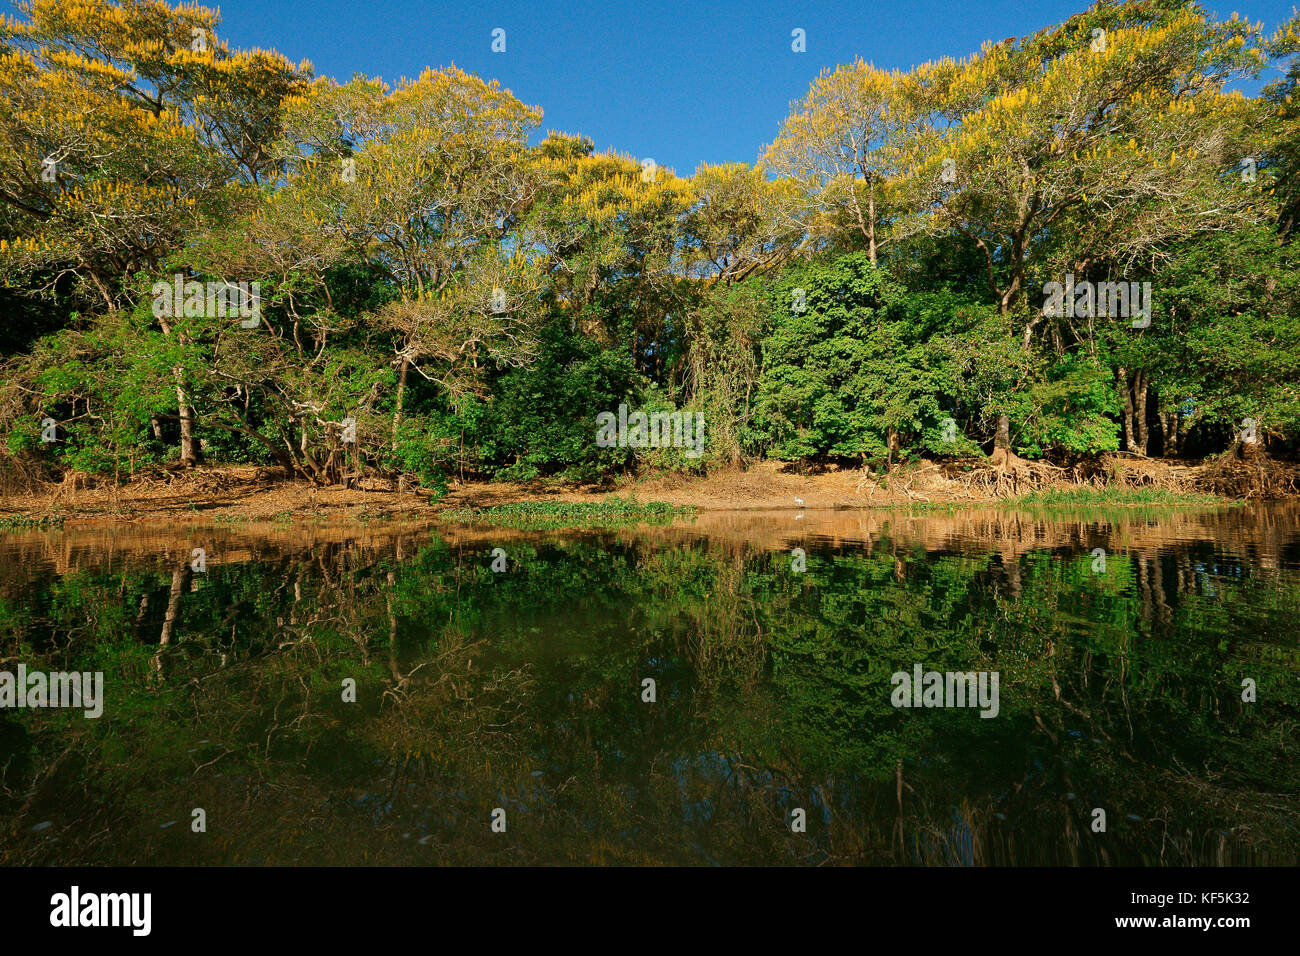 Tropical riverbank vegetation on the river bank, yellow flowering lapacho trees, Yellow Lapacho (Handroanthus serratifolius) Stock Photo